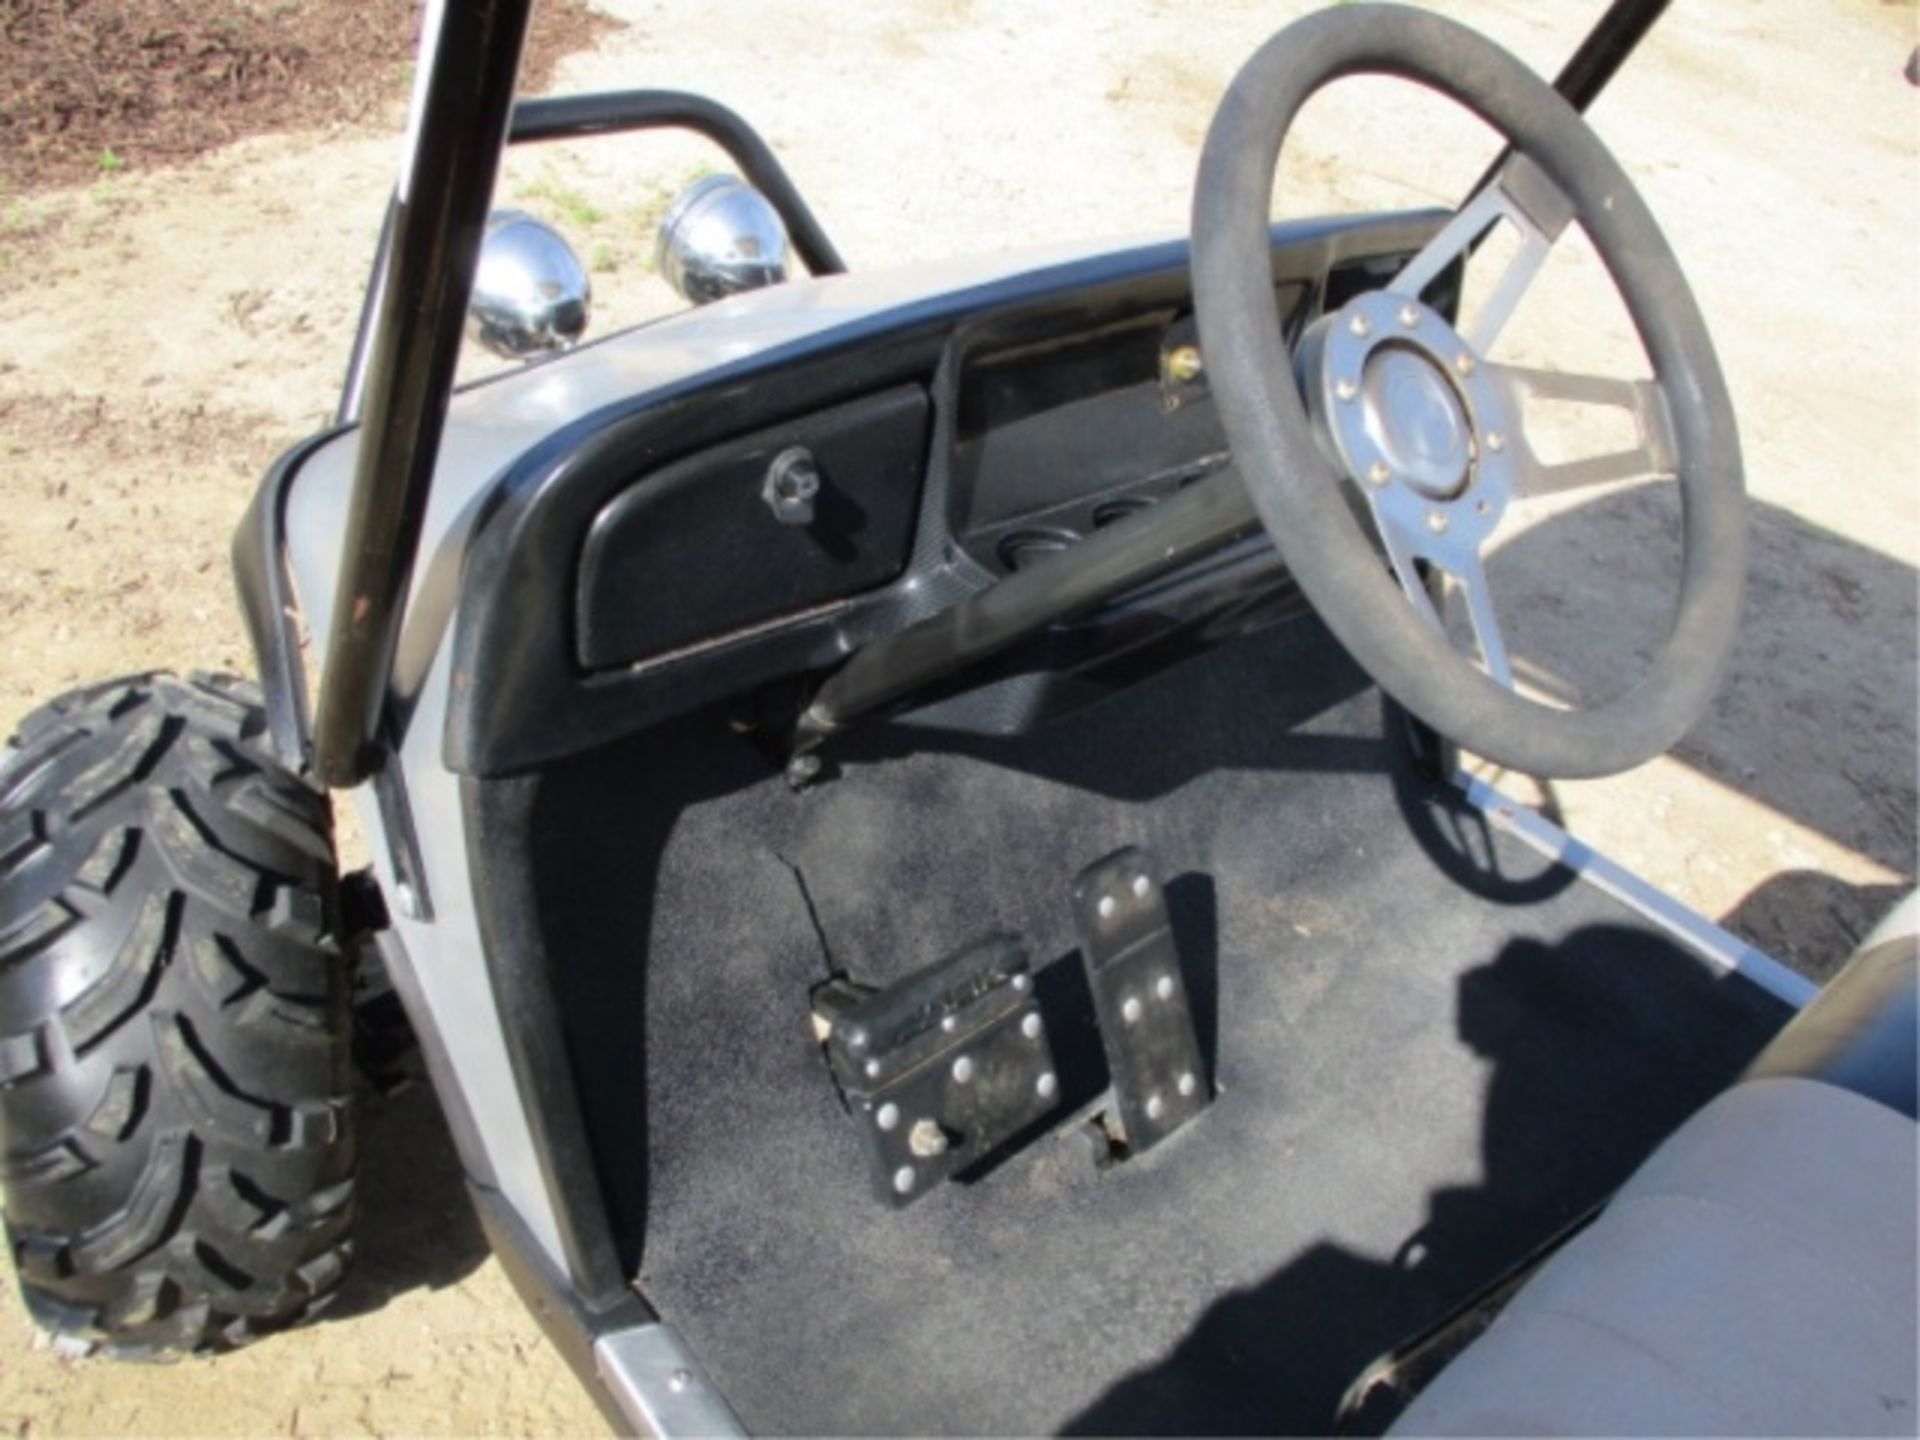 EzGo Golf Cart, 2017 Predator 670cc Gas Engine, Lift Kit, Custom Roll-Cage W/Canopy, S/N: 912224 - Image 14 of 39